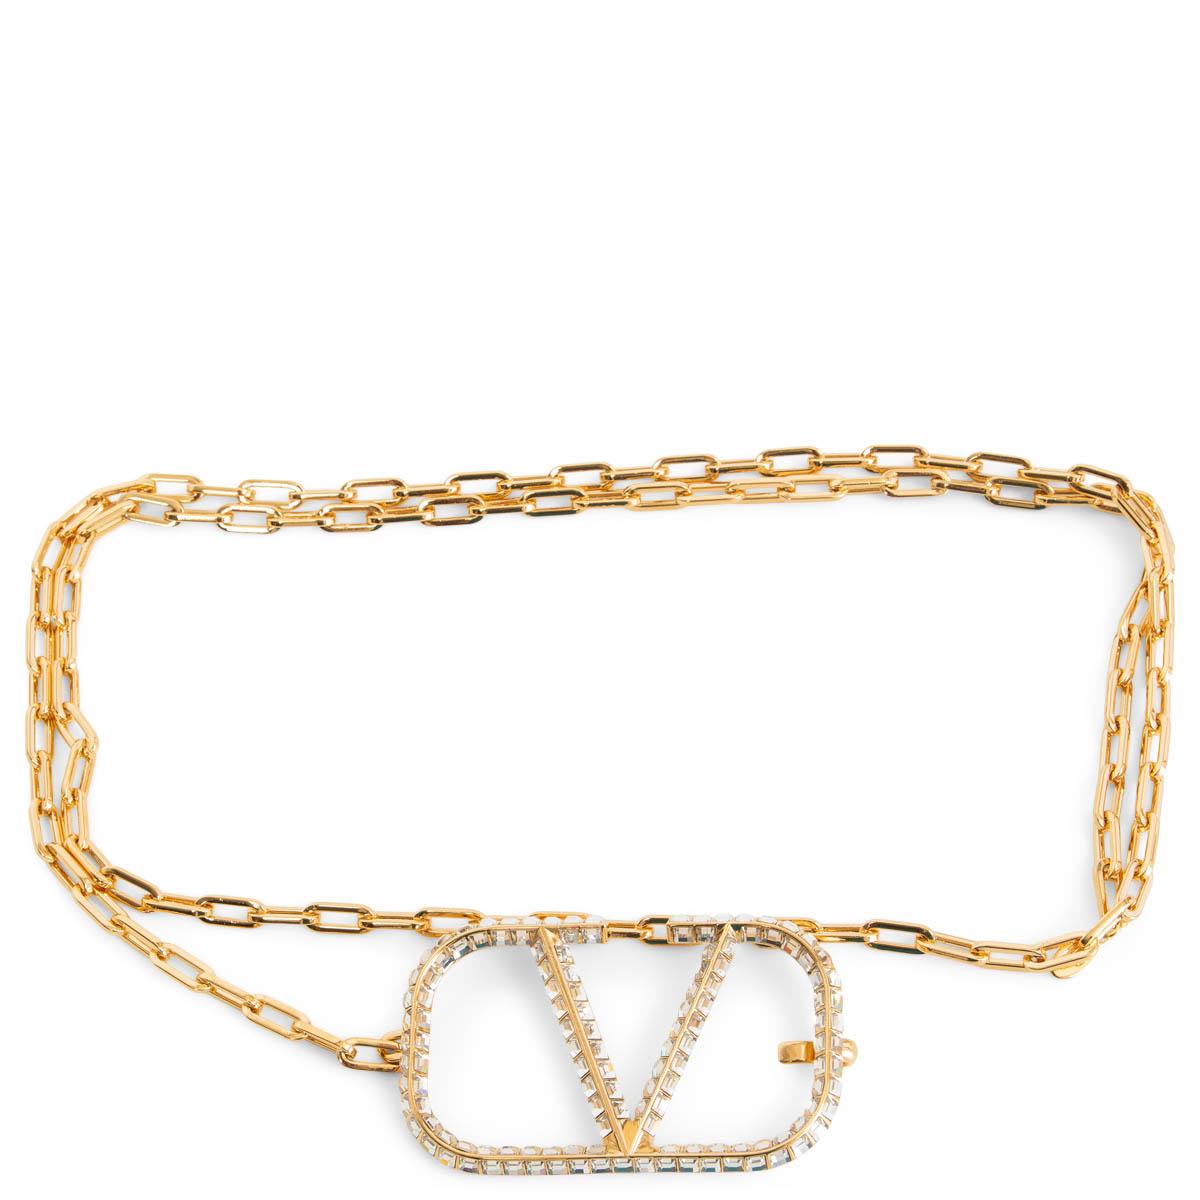 V Logo Embellished Chain Belt in Multicoloured - Valentino